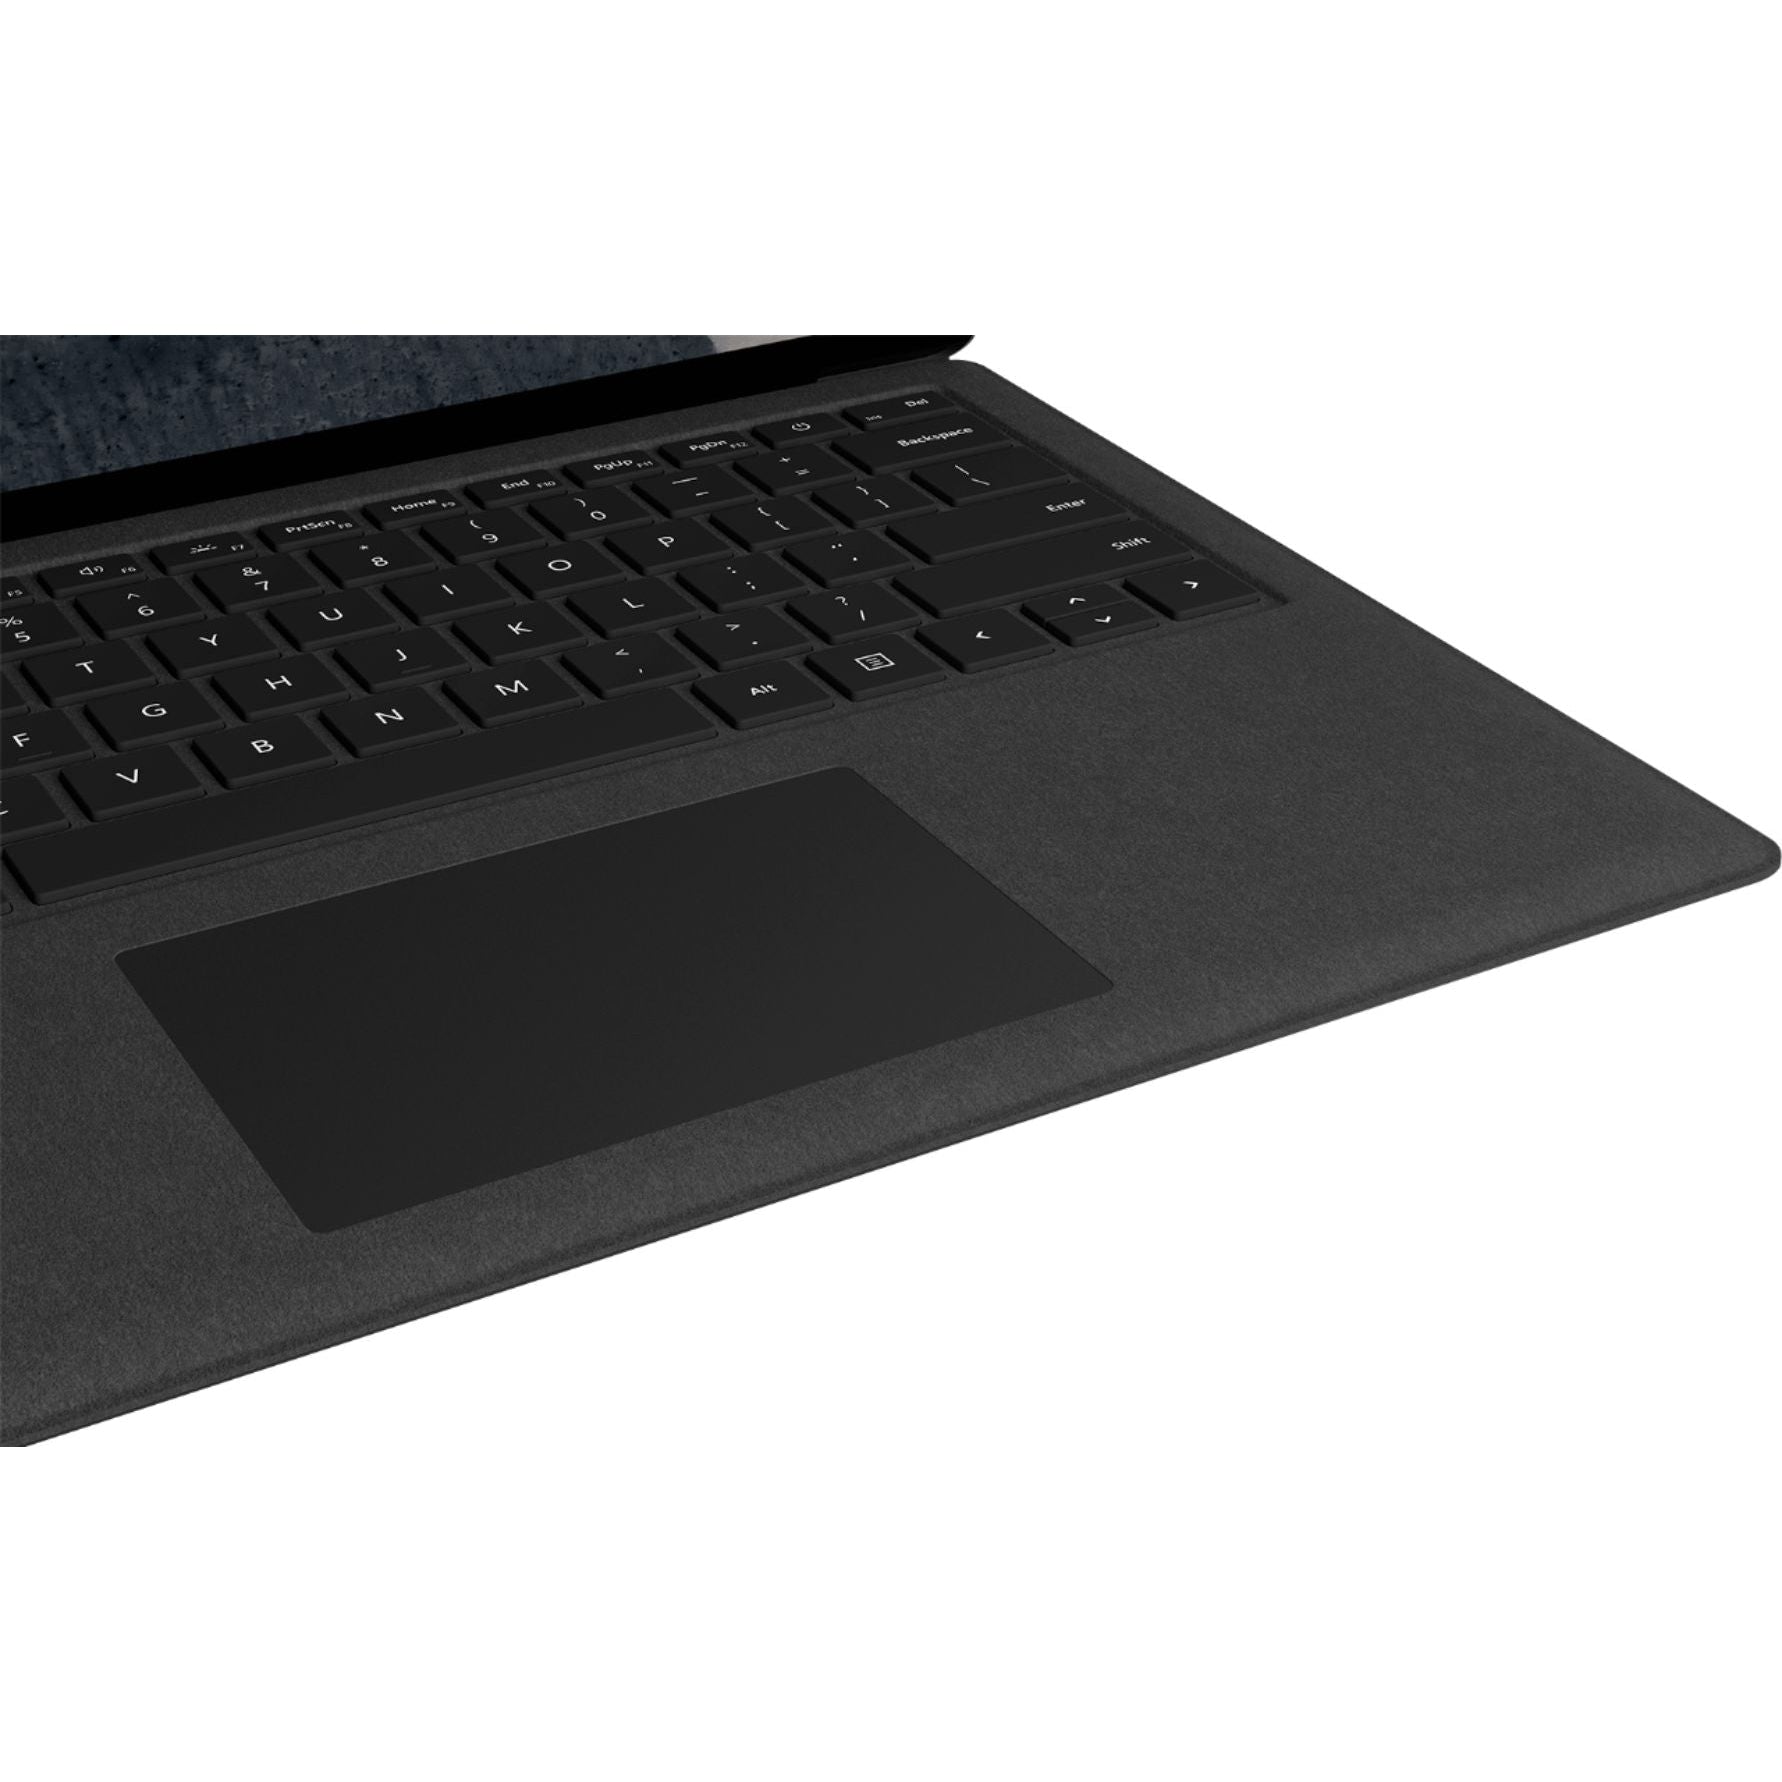 Microsoft Surface Laptop 2 1769, Core i5, 8GB RAM, 256GB SSD, Black